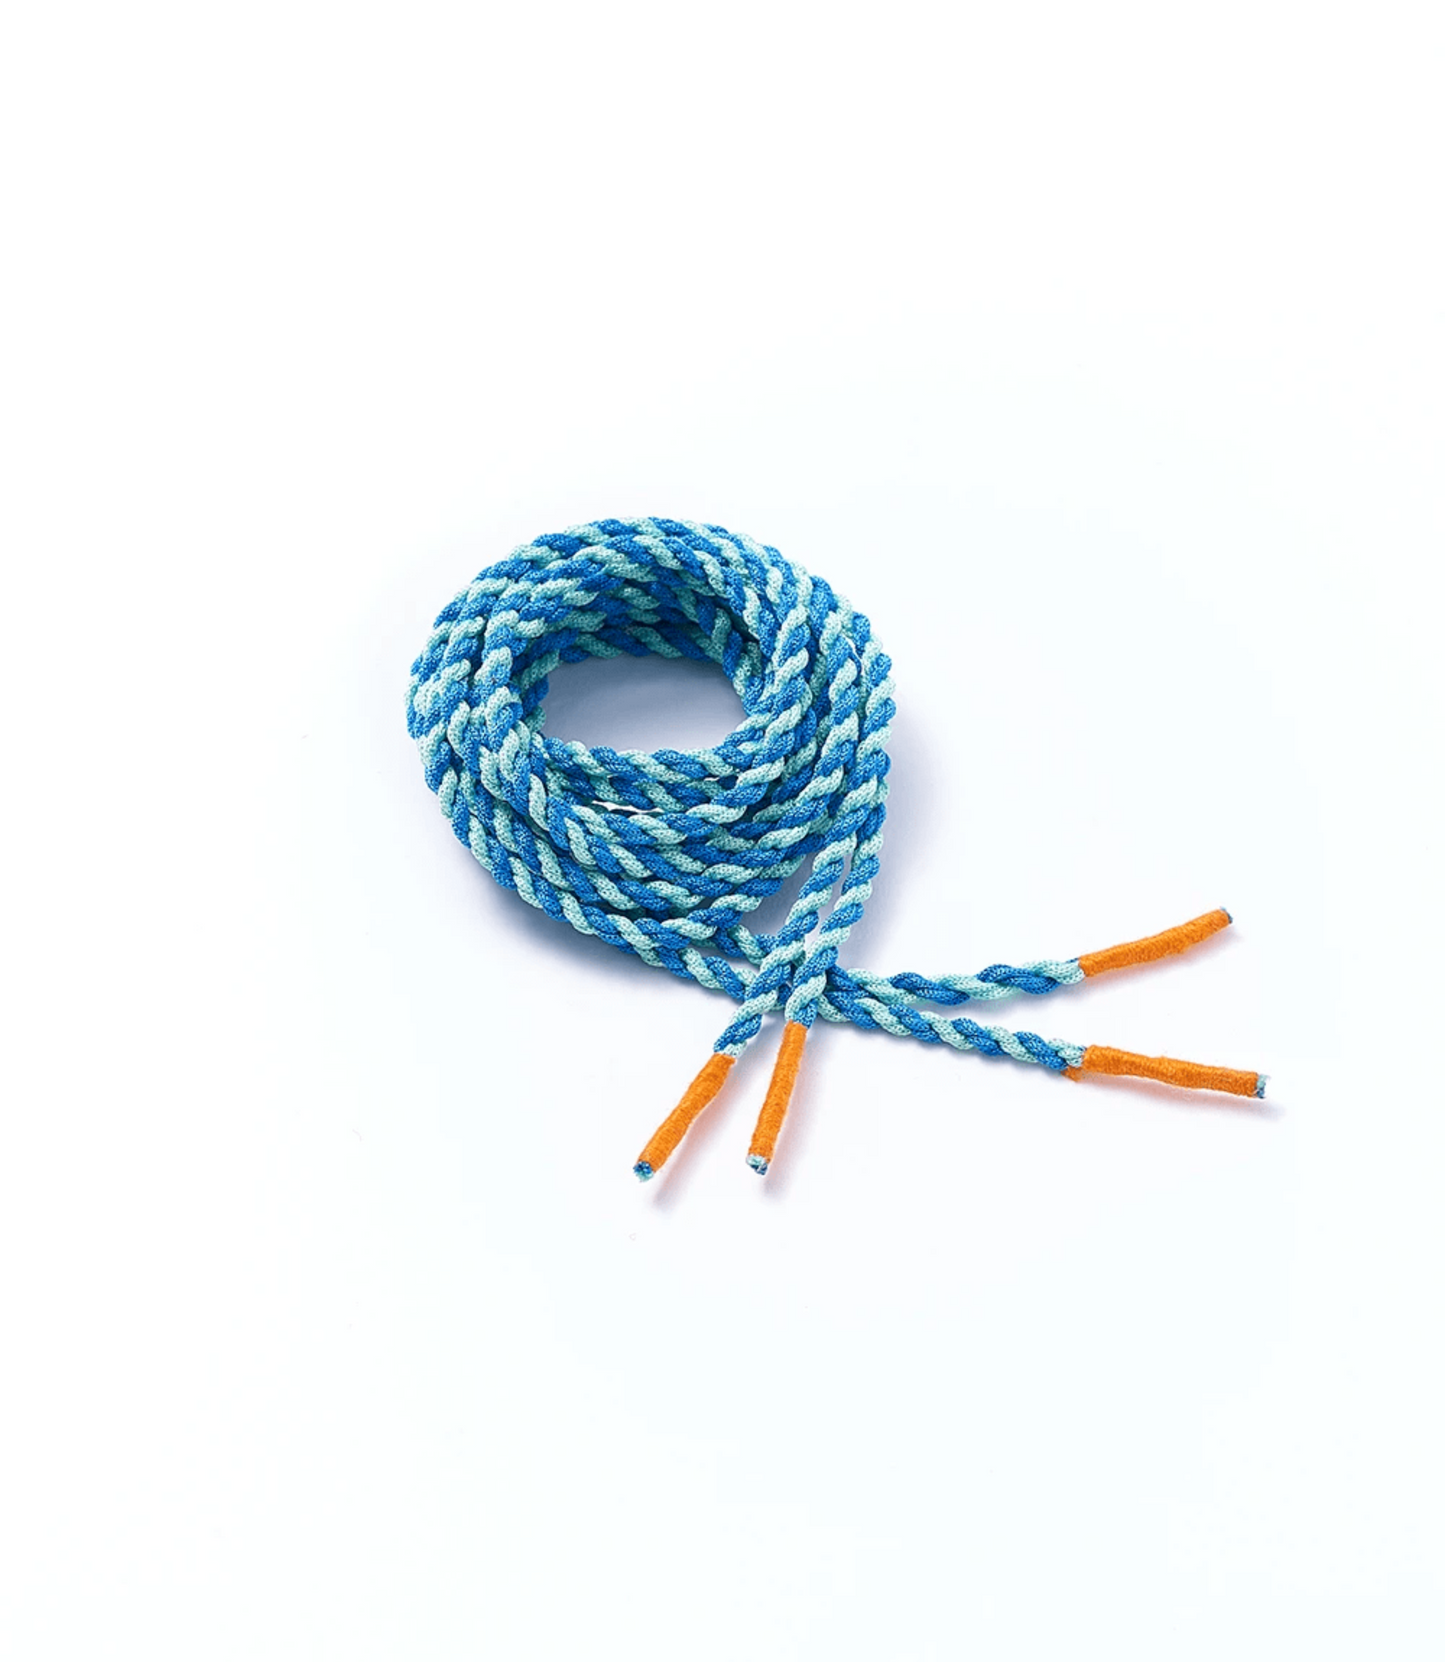 Vintage Blue Shoelace - 45", Ethical, Handmade - Aksa